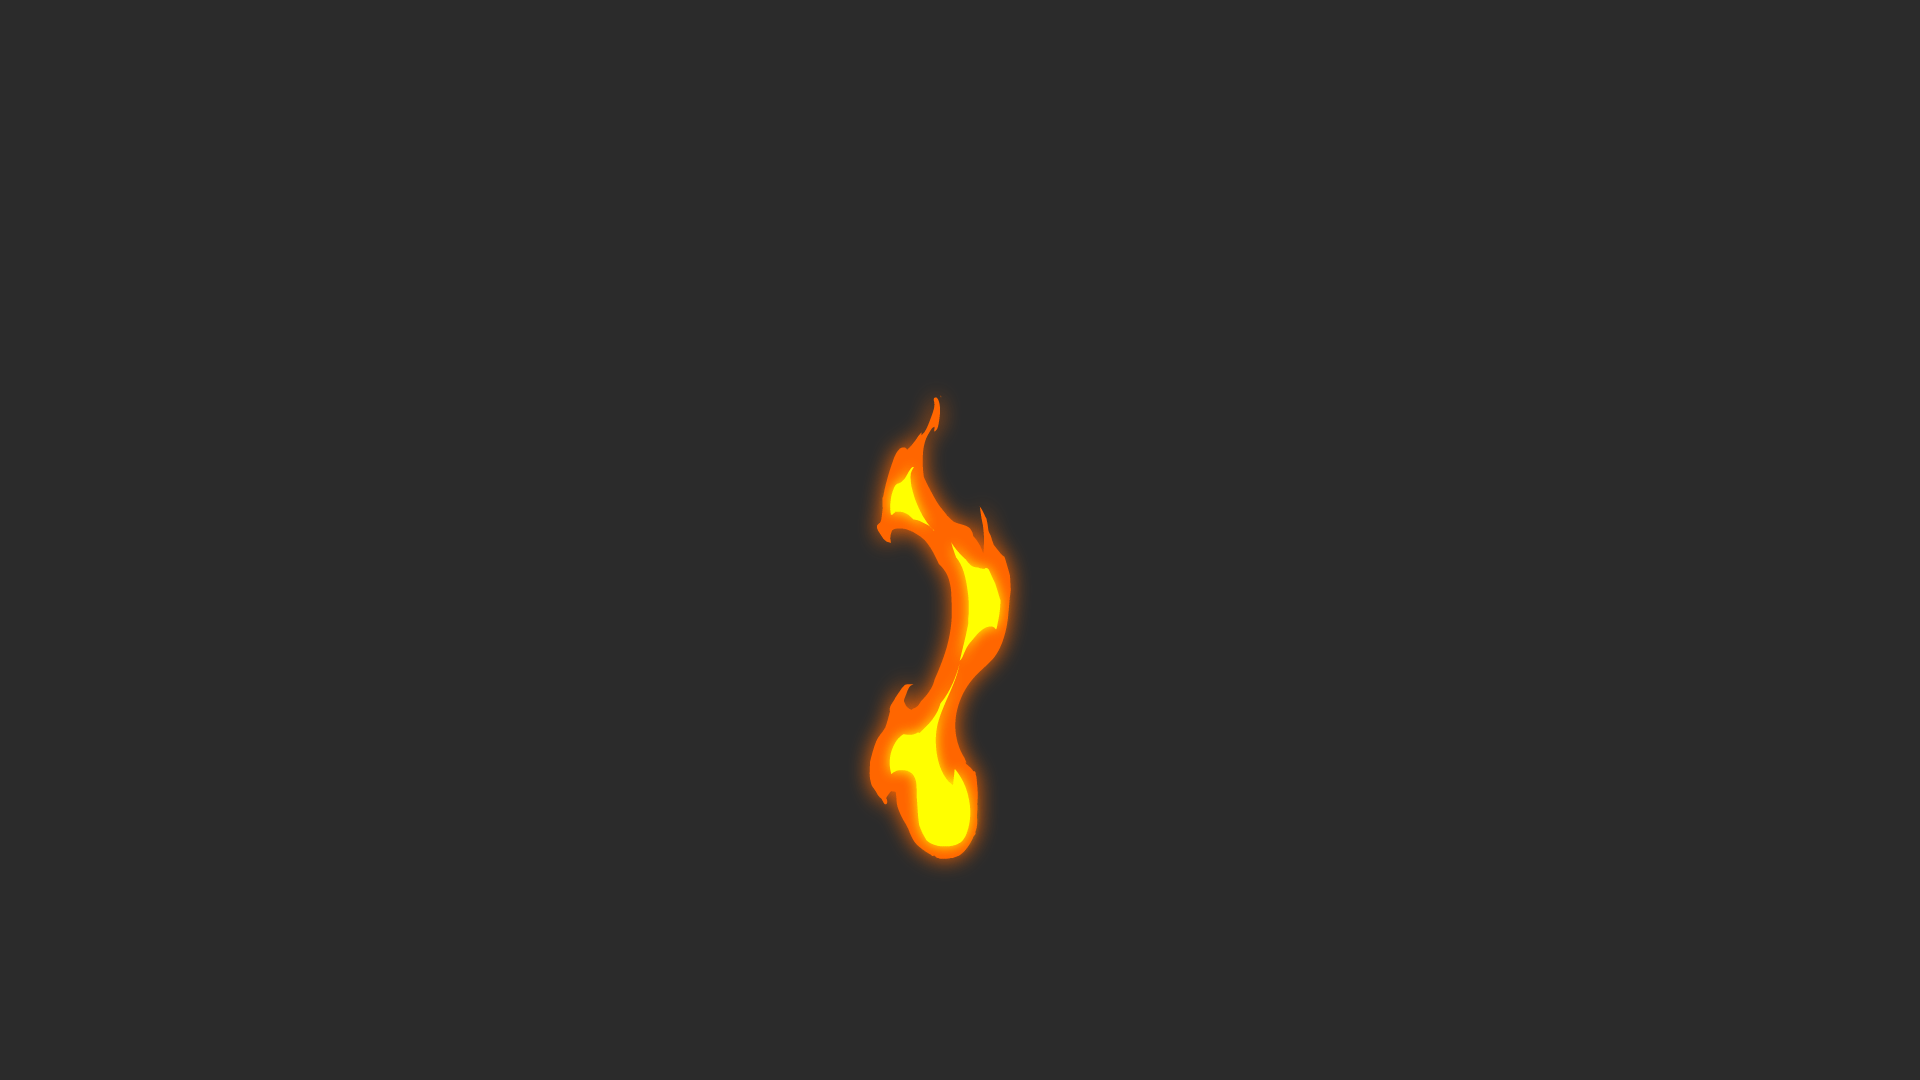 ArtStation - 2dfx fire compilation